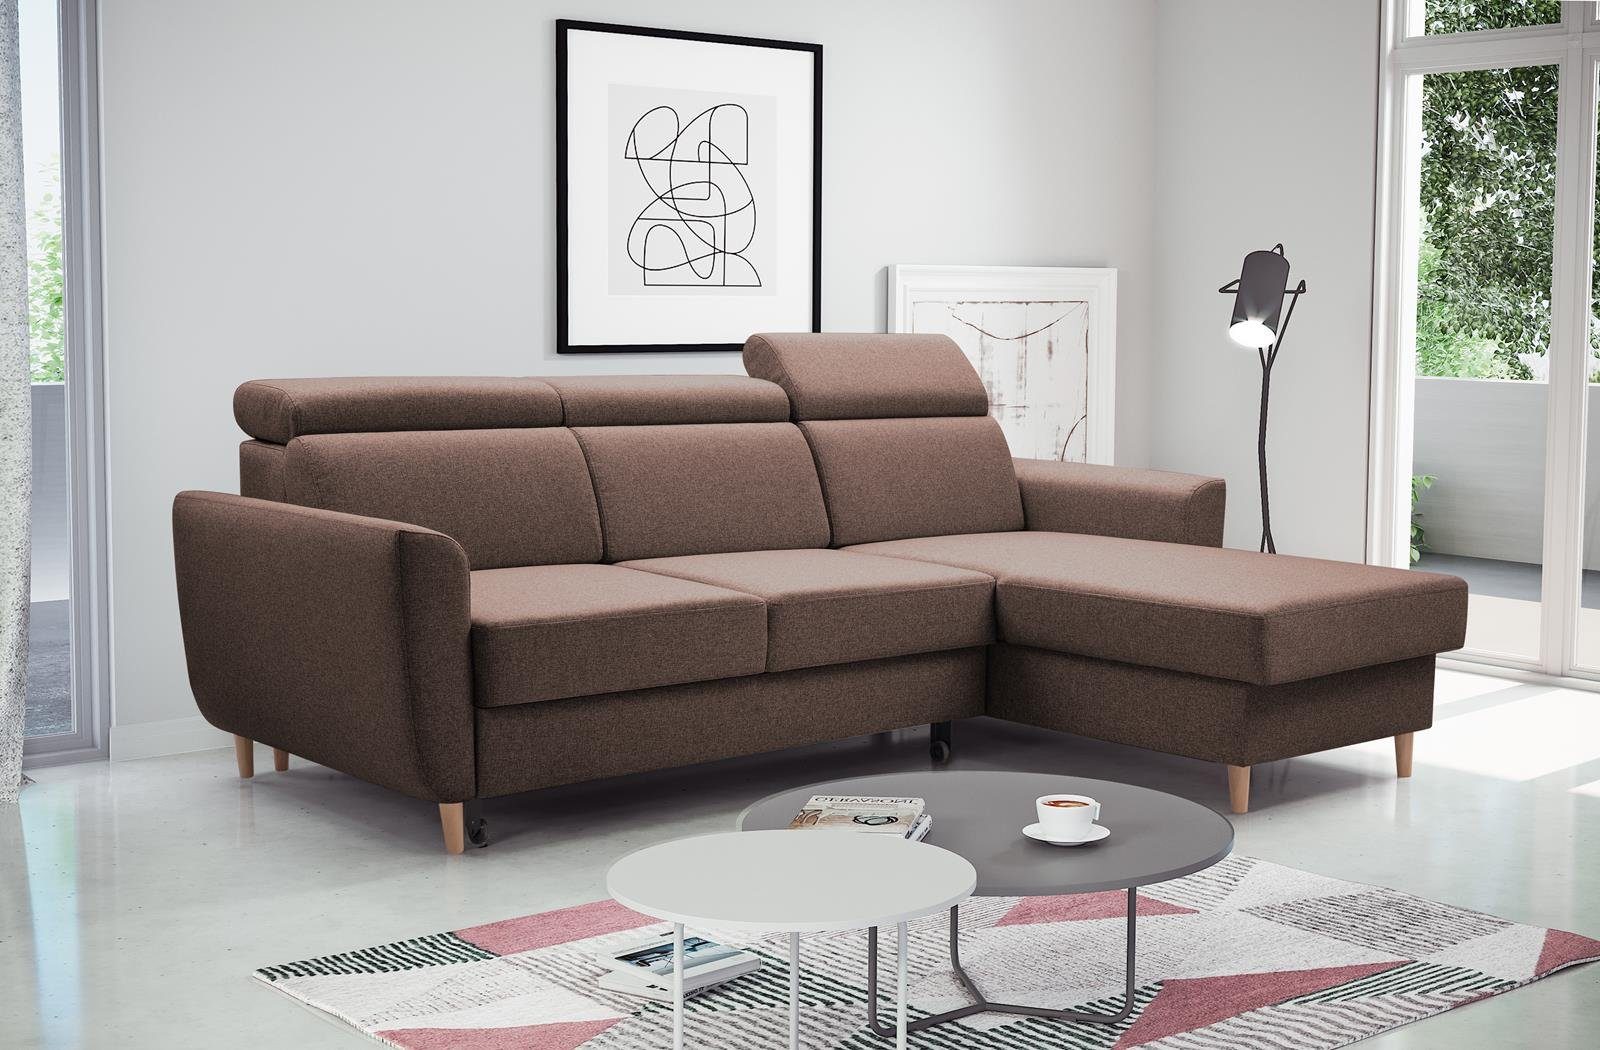 Beautysofa Ecksofa Modern Ecksofa GUSTAW Sofa Couch mit Schlaffunktion universelle braun